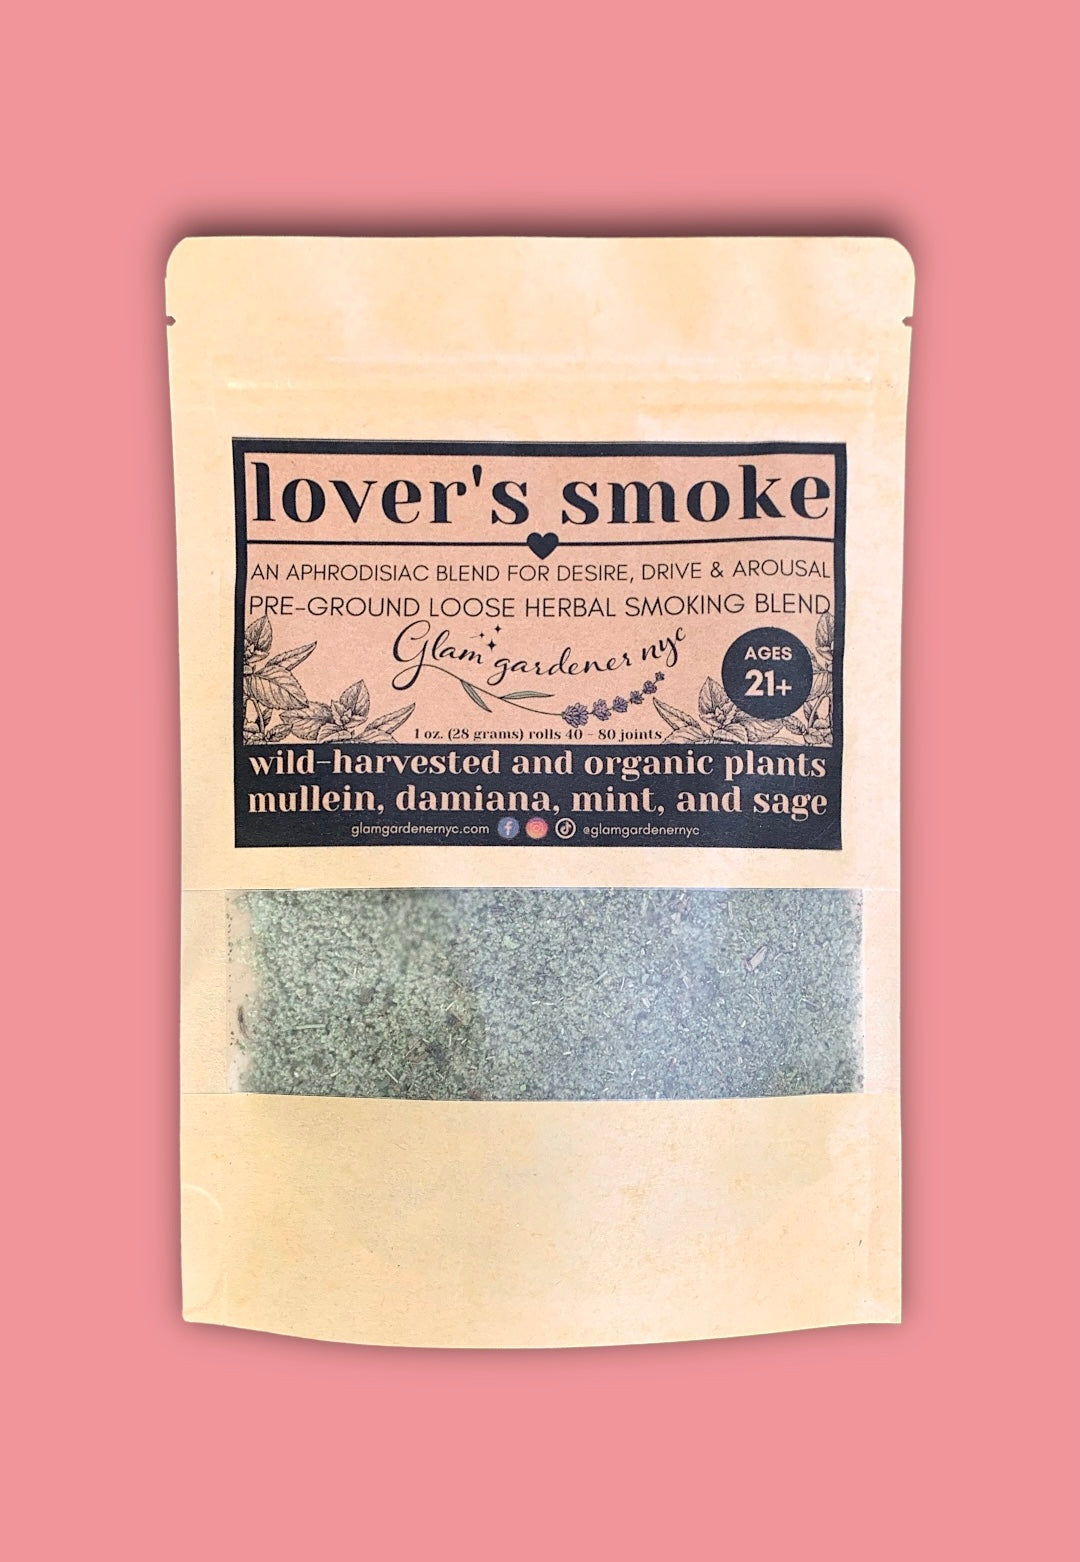 Lover’s smoke herbal organic smoking blend by glam gardener with wild harvested mullein organic Damiana organic mint and organic sage for aphrodisiac 